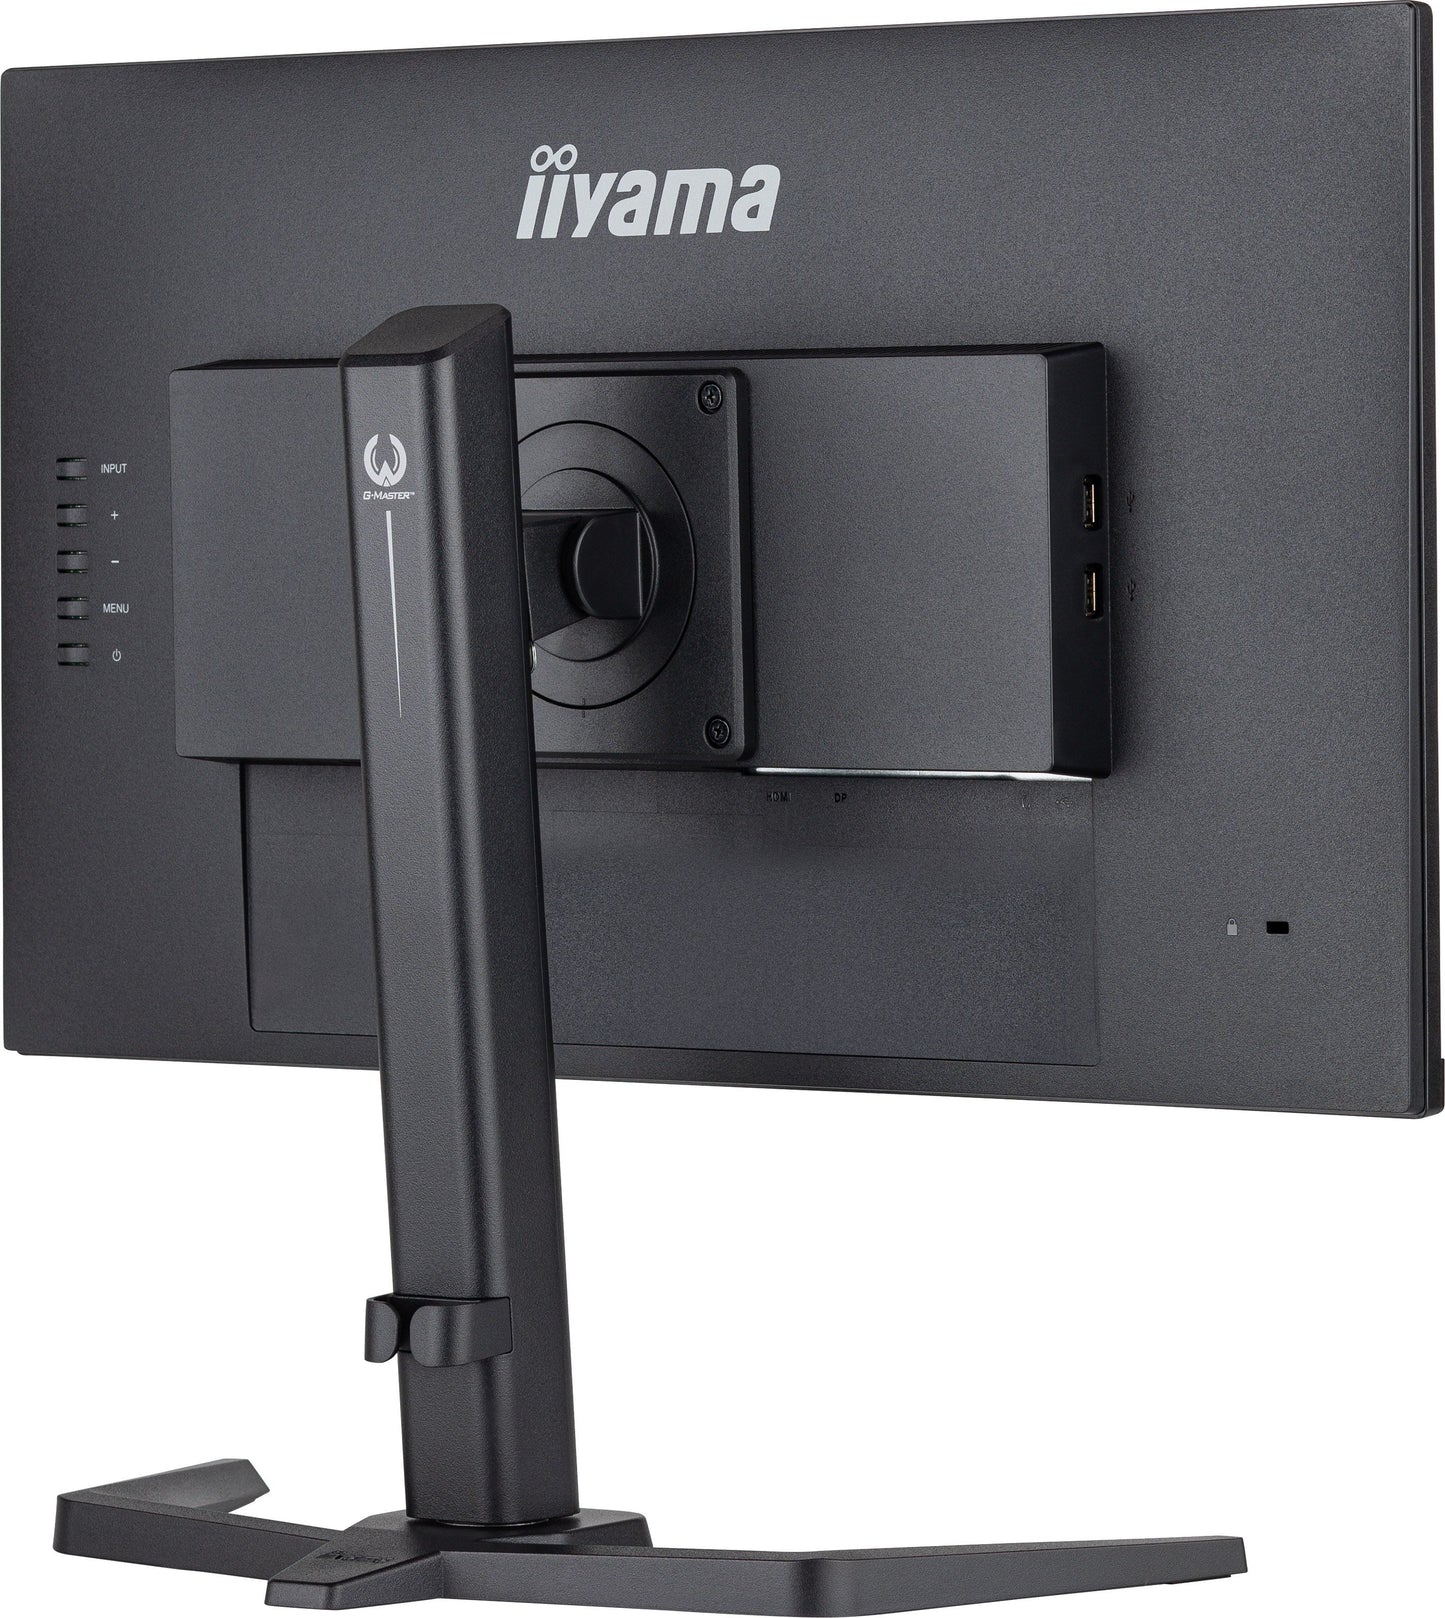 iiyama G-Master GB2470HSU-B5 Red Eagle 24" Full HD IPS Gaming Monitor